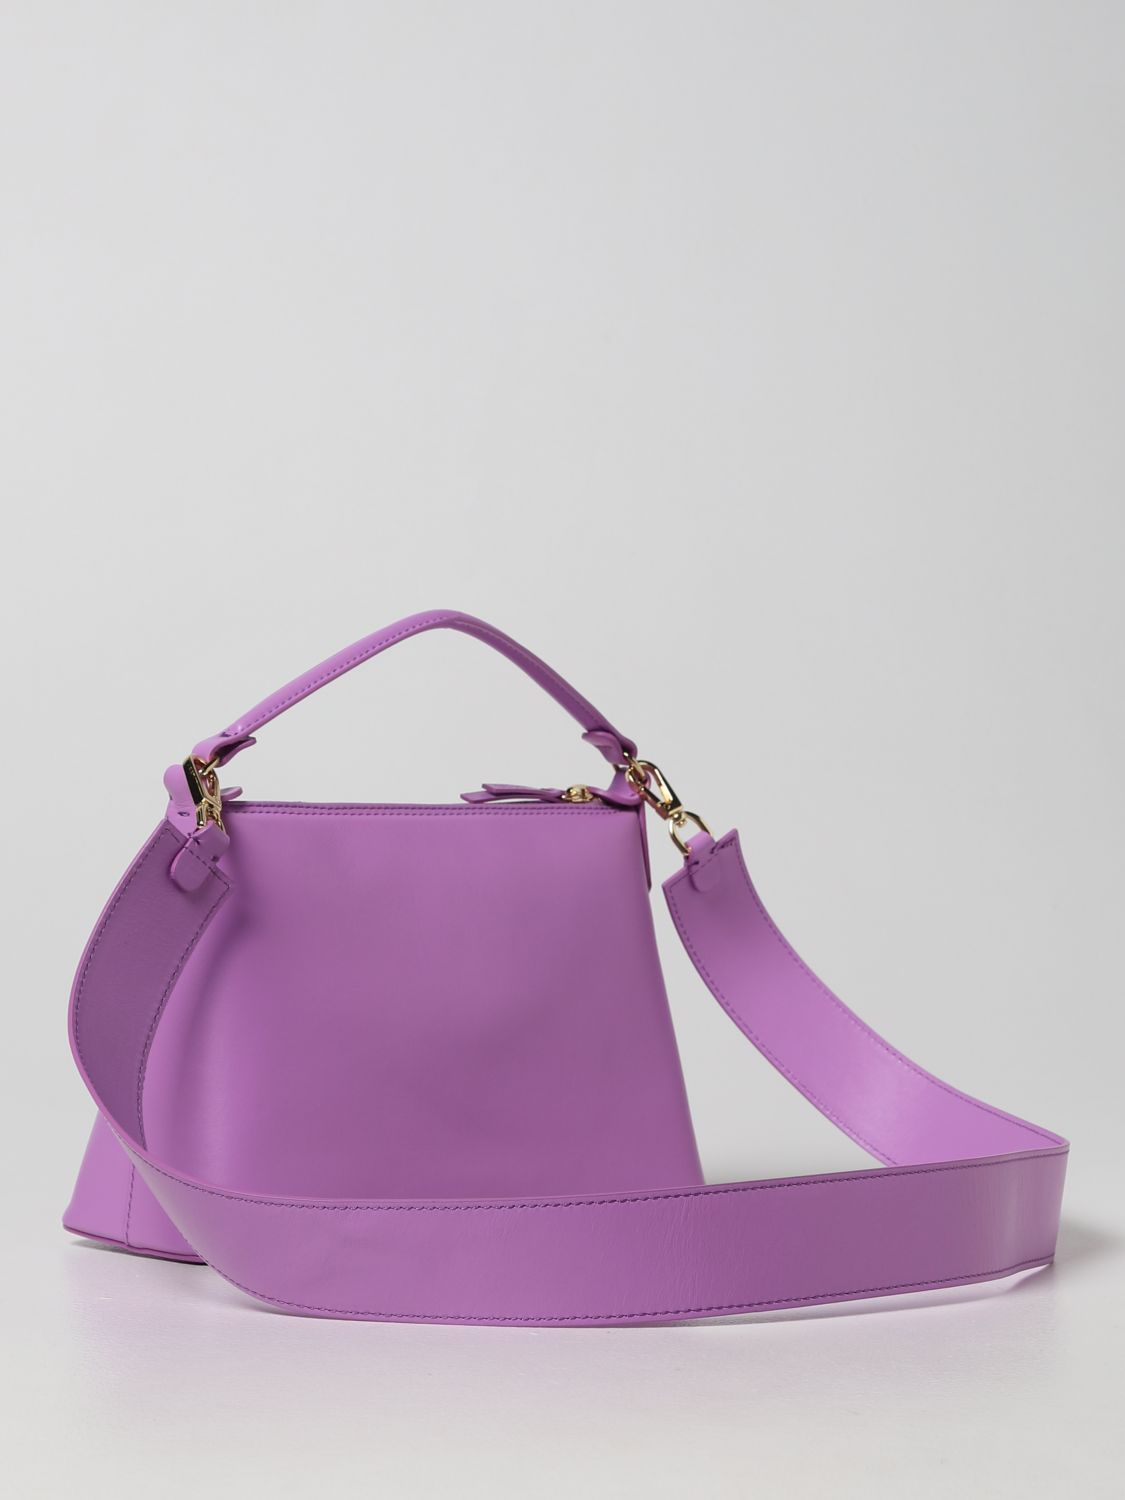 LIU JO: Leonie Hanne x leather bag - Violet | Liu Jo handbag ...